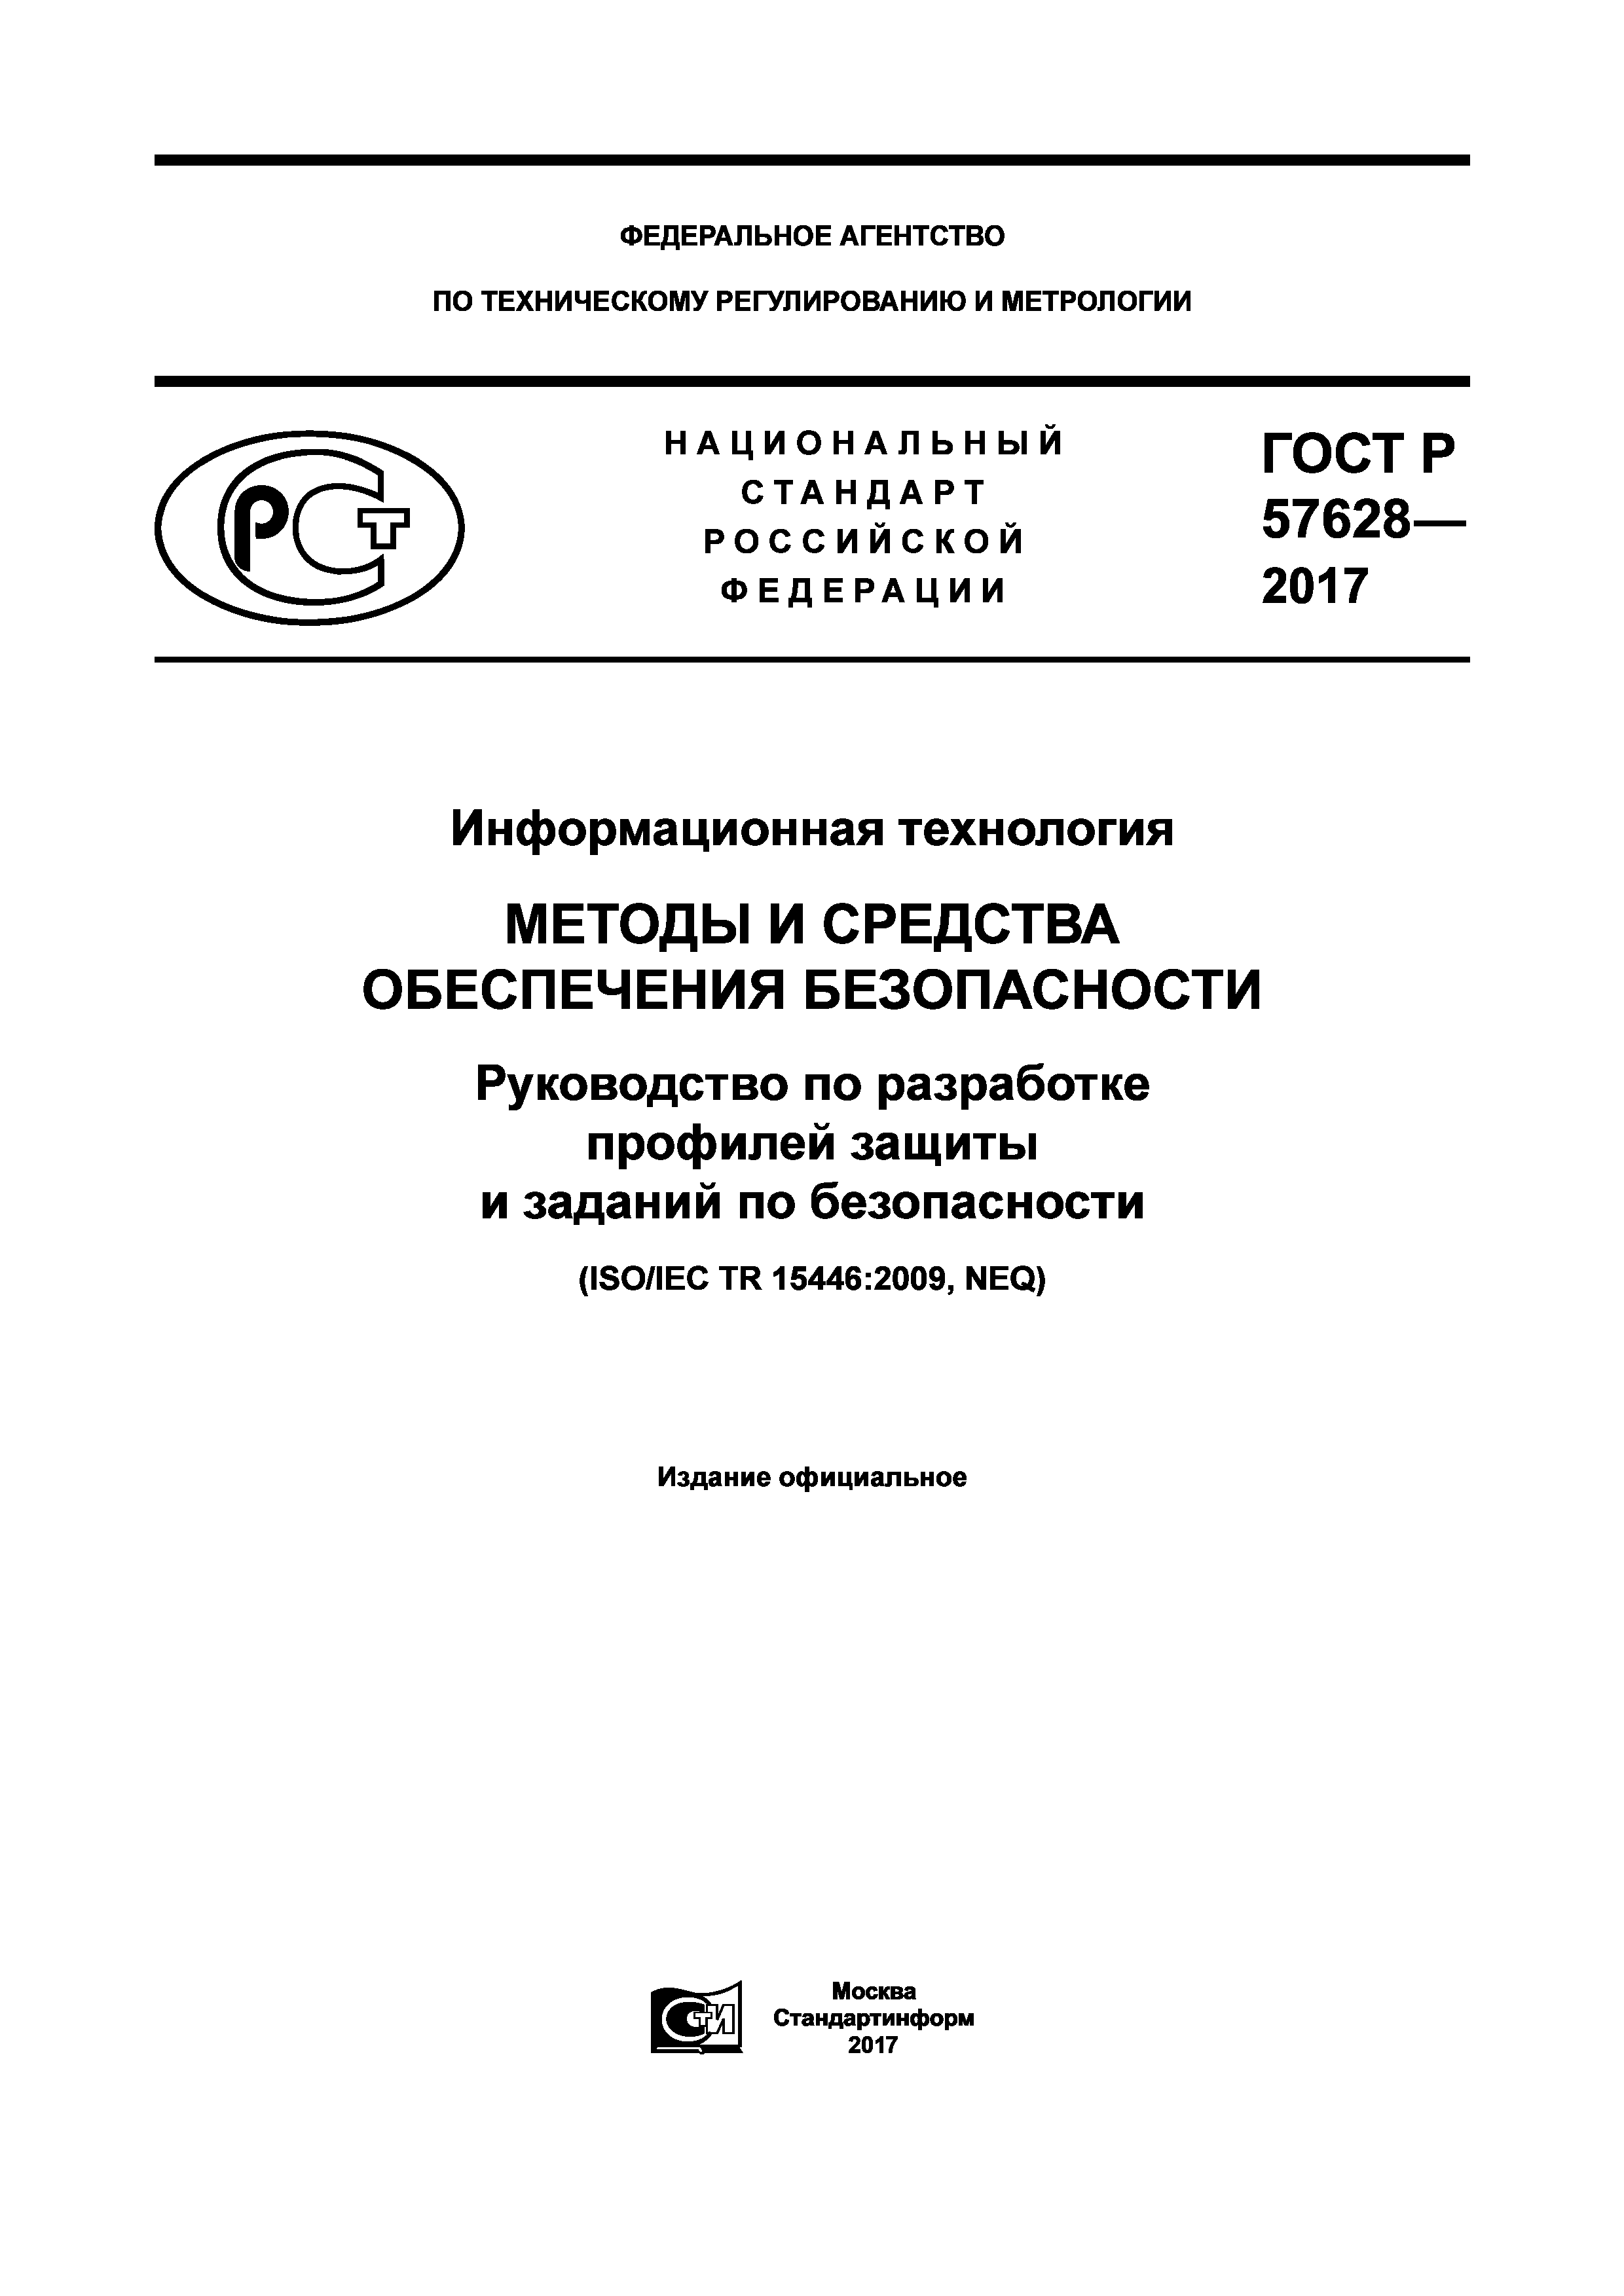 ГОСТ Р 57628-2017